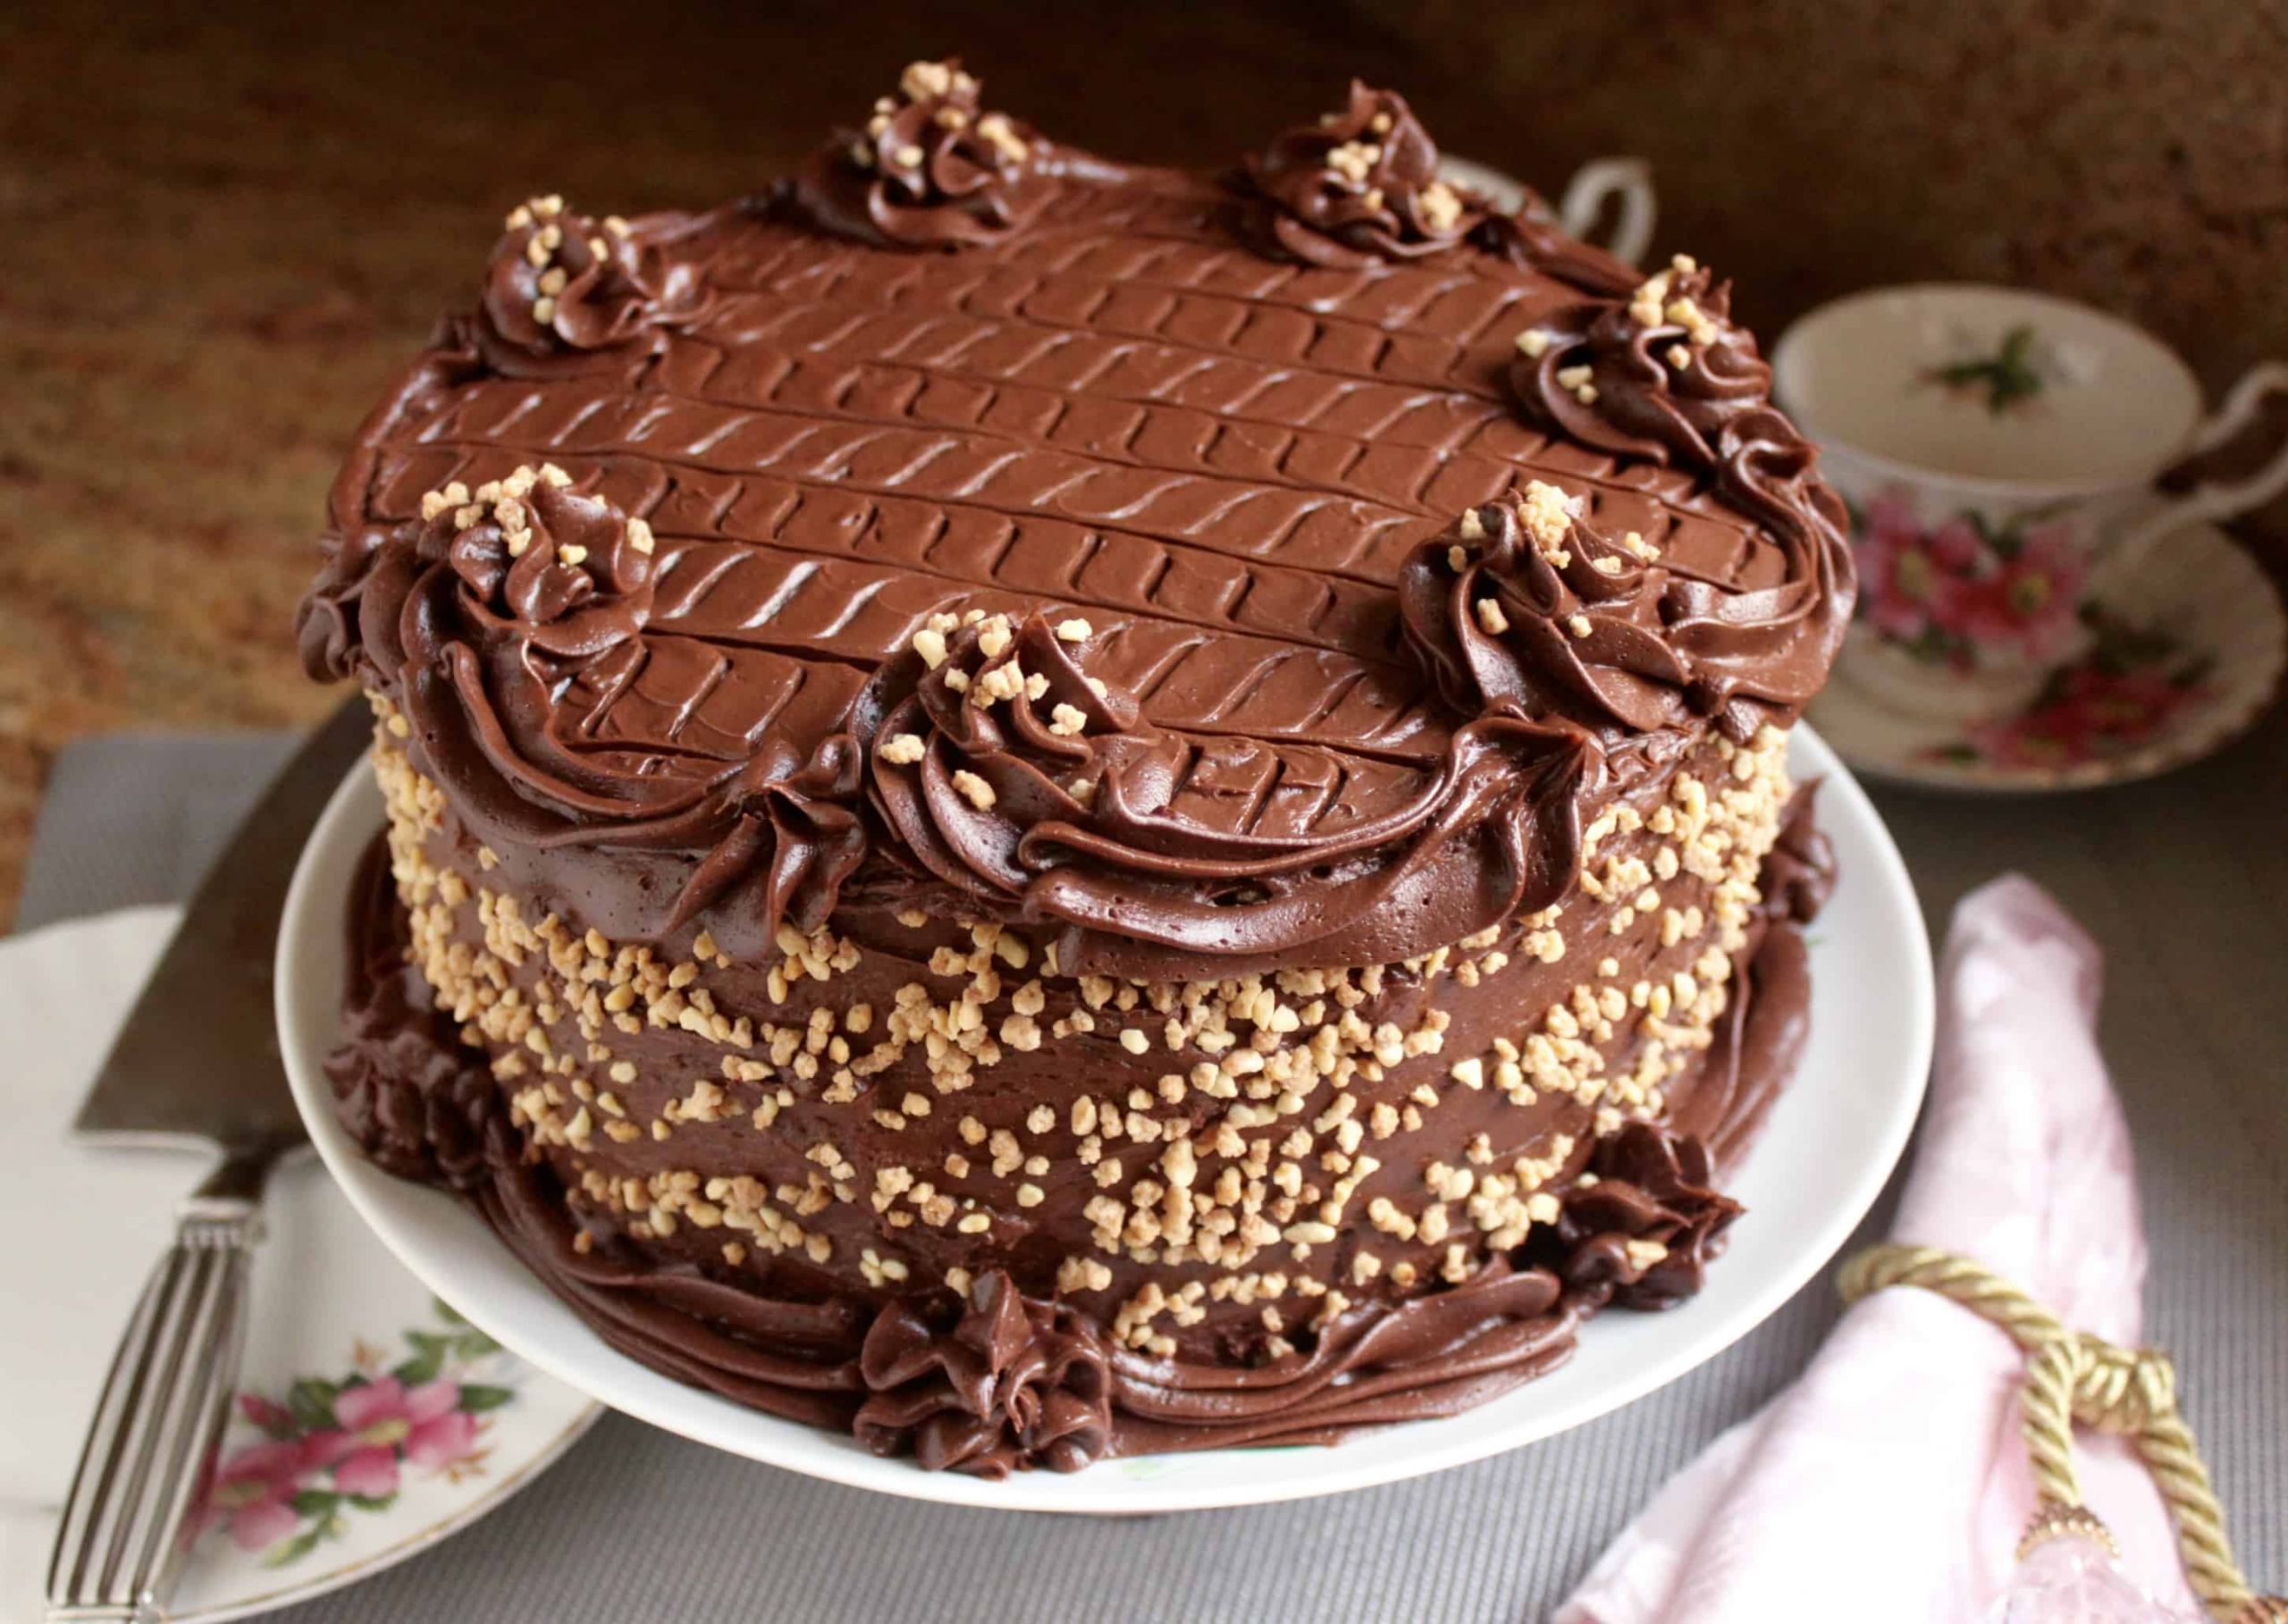 Delicious Chocolate Cake Elegant the Very Best Most Delicious and Moist Chocolate Cake You